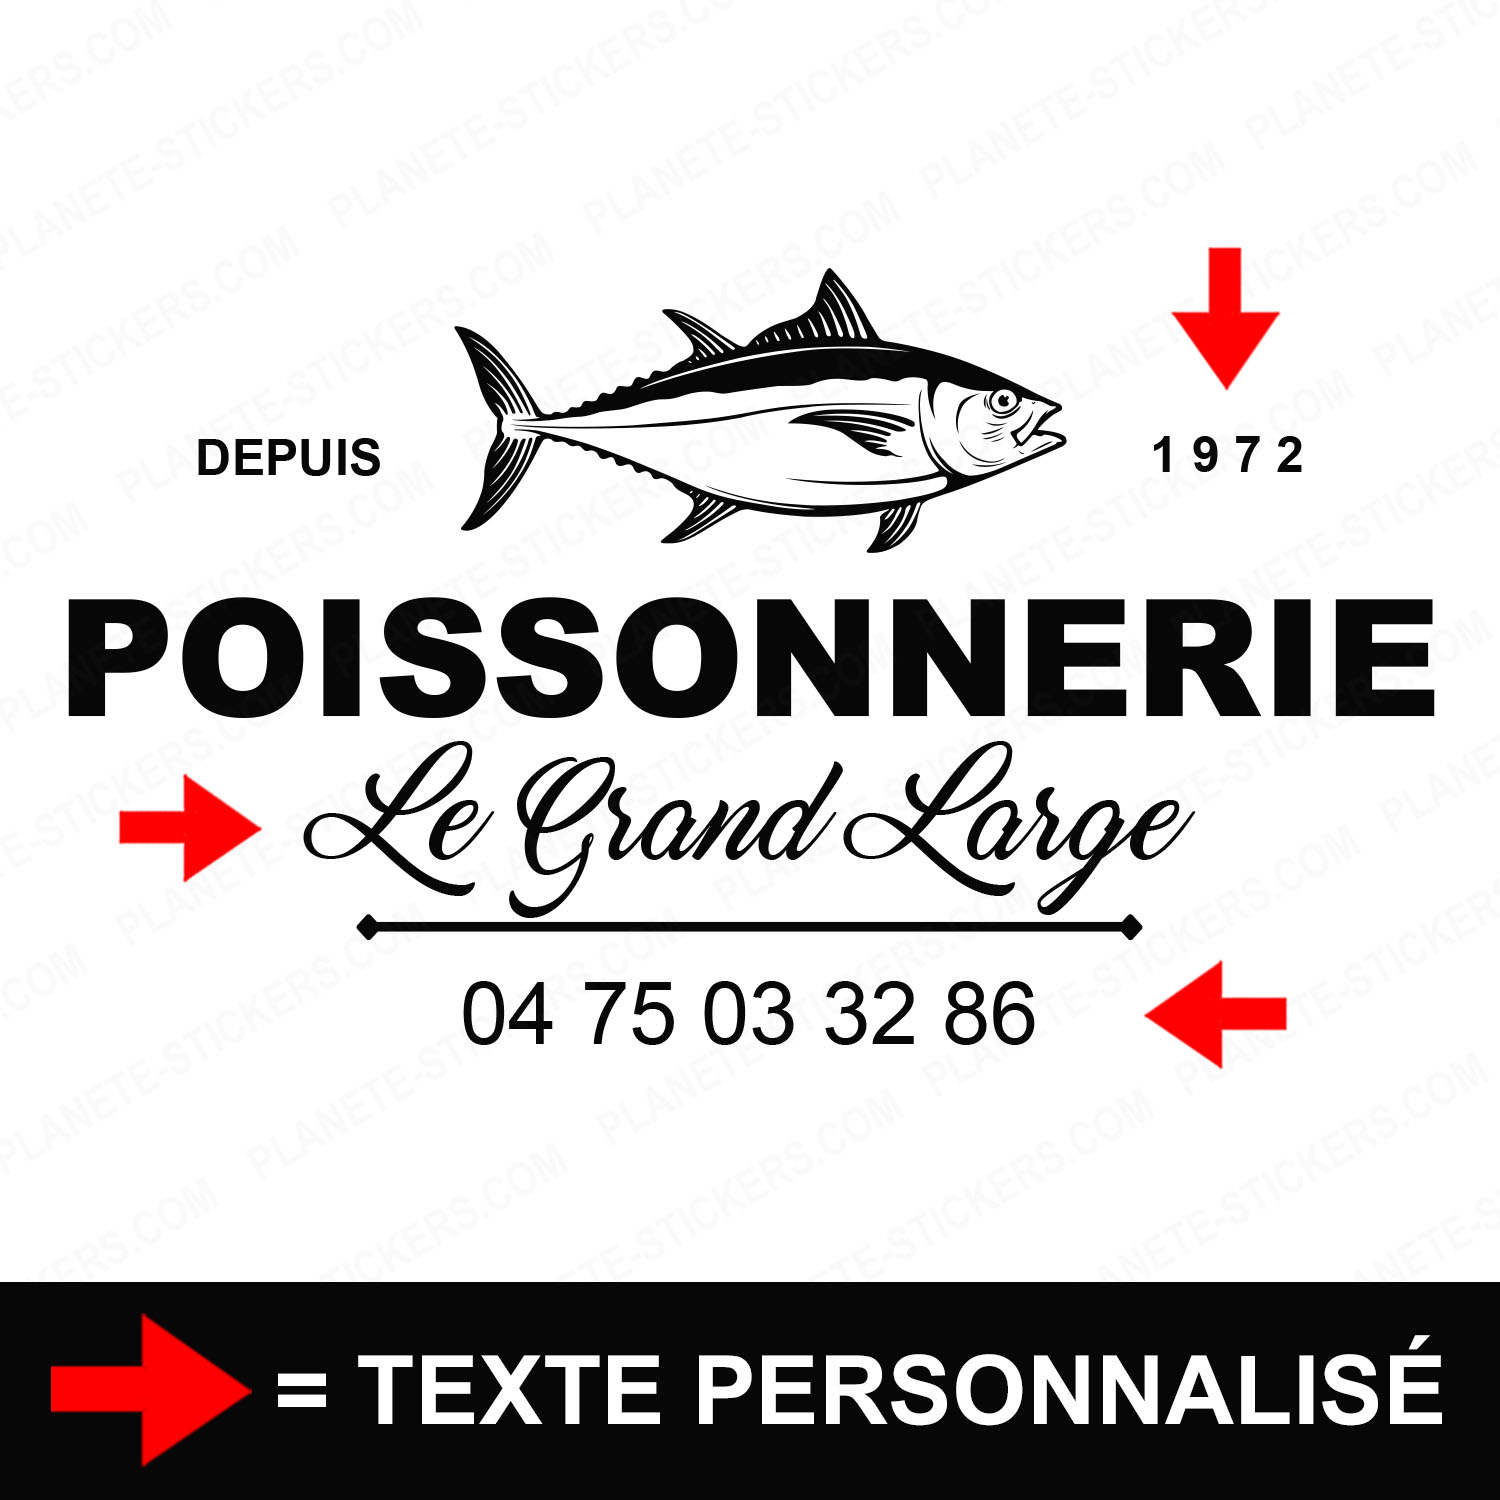 ref2poissonnerievitrine-stickers-poissonnerie-vitrine-sticker-personnalisé-autocollant-poissonnier-pro-vitre-poisson-professionnel-logo-thon-2